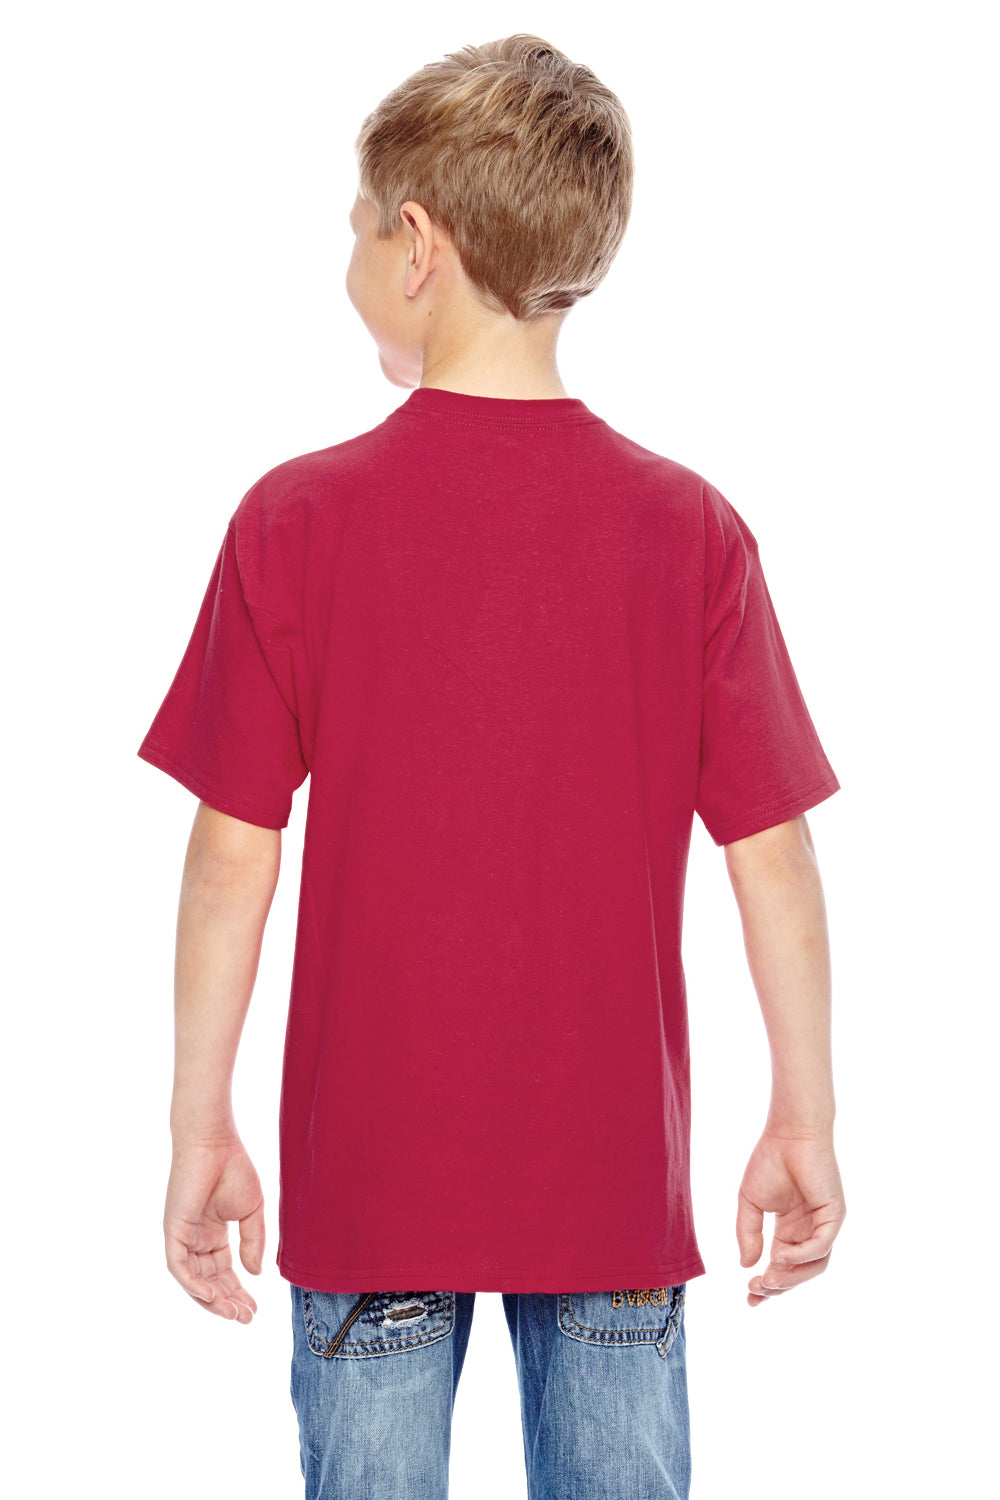 Hanes 498Y Youth Nano-T Short Sleeve Crewneck T-Shirt Red Back